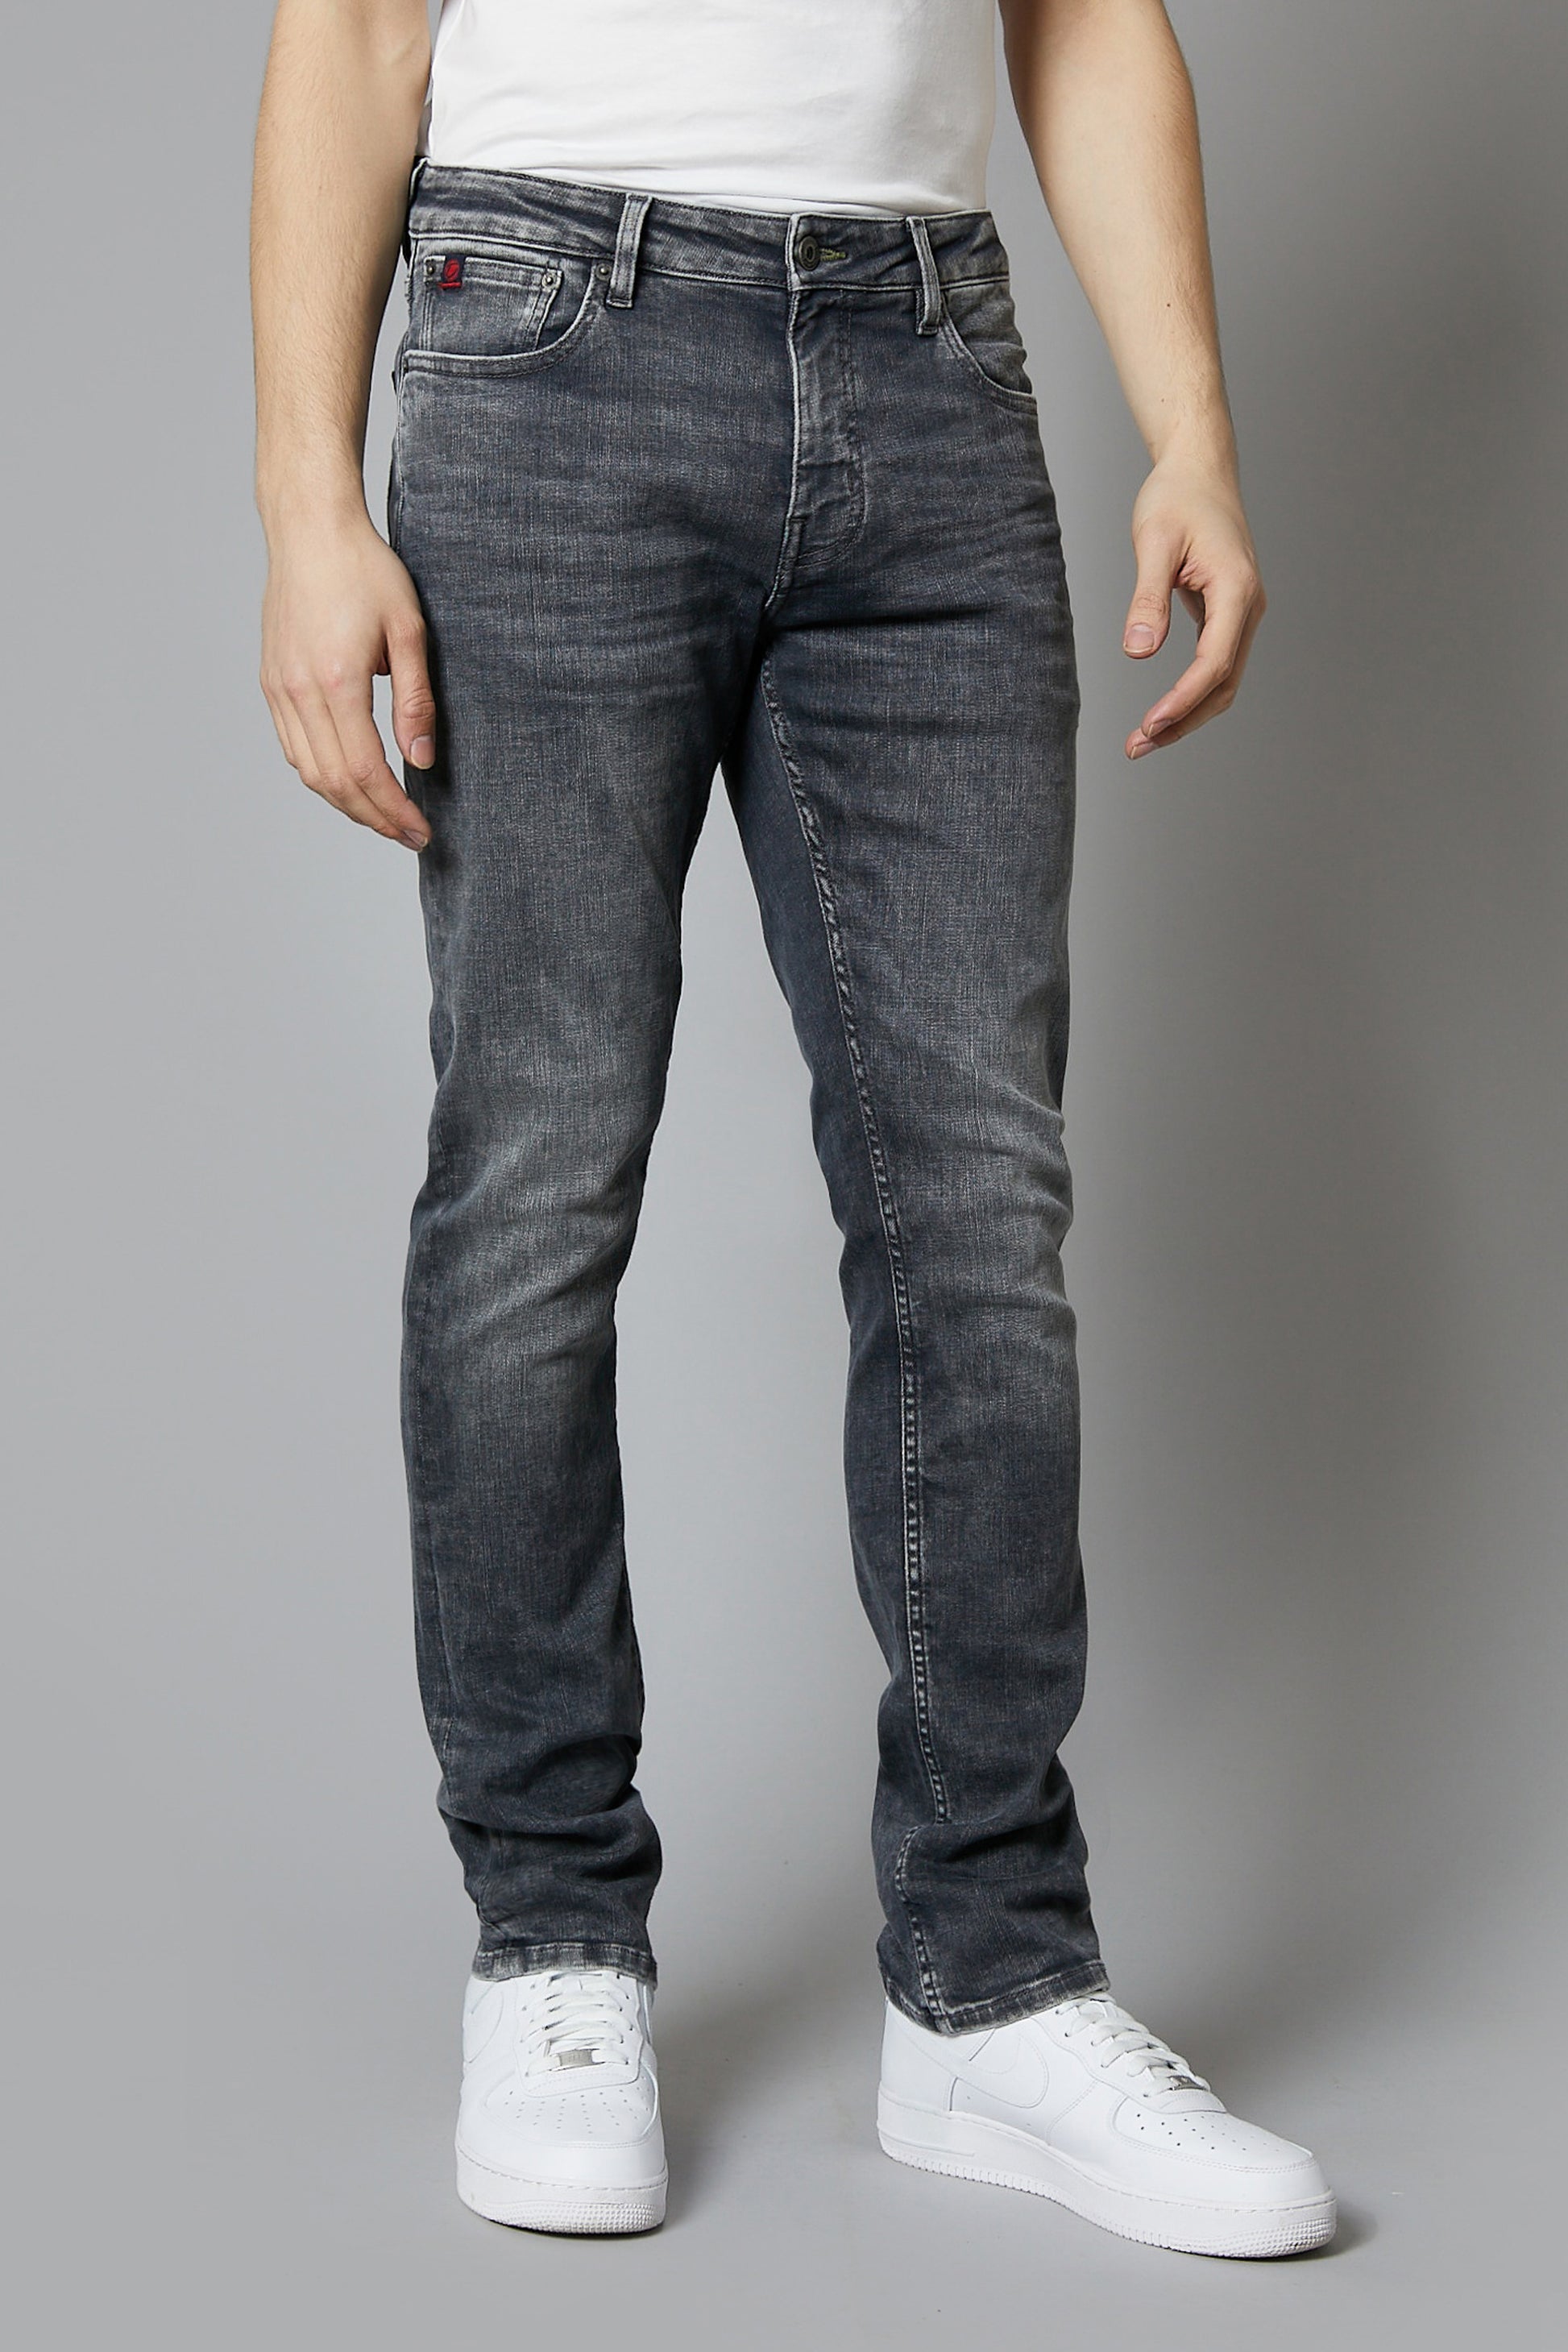 DML Jeans Alaska mens grey straight leg denim jeans